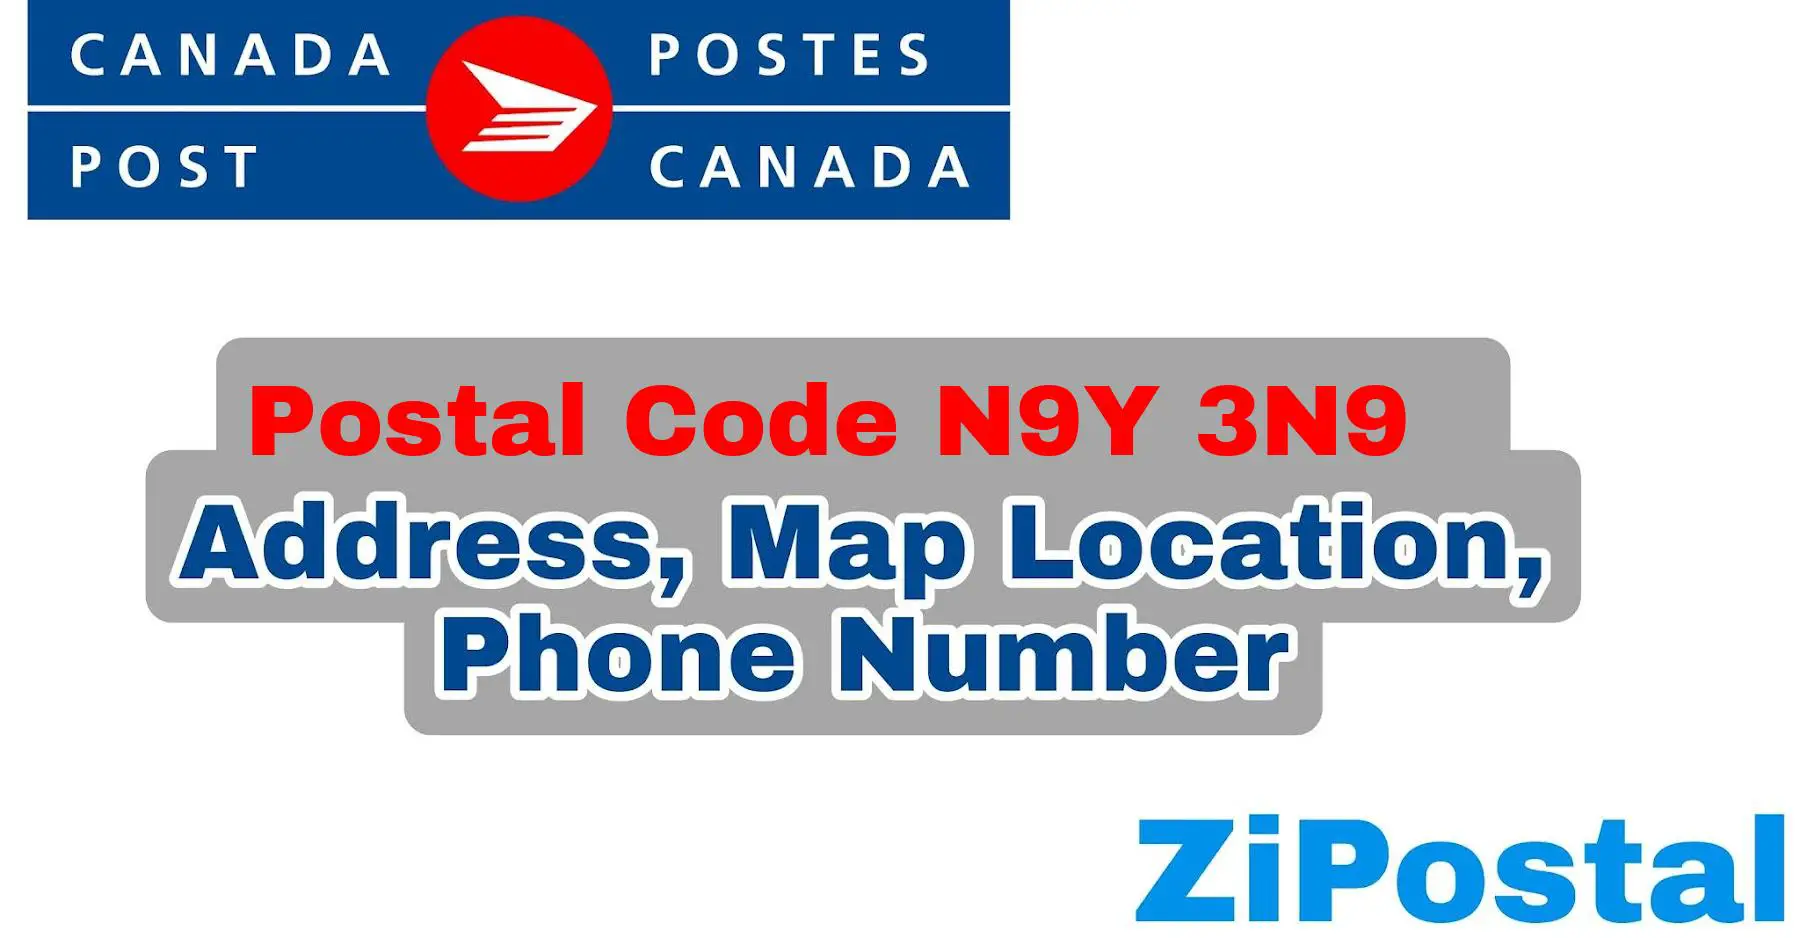 Postal Code N9Y 3N9 Address Map Location and Phone Number